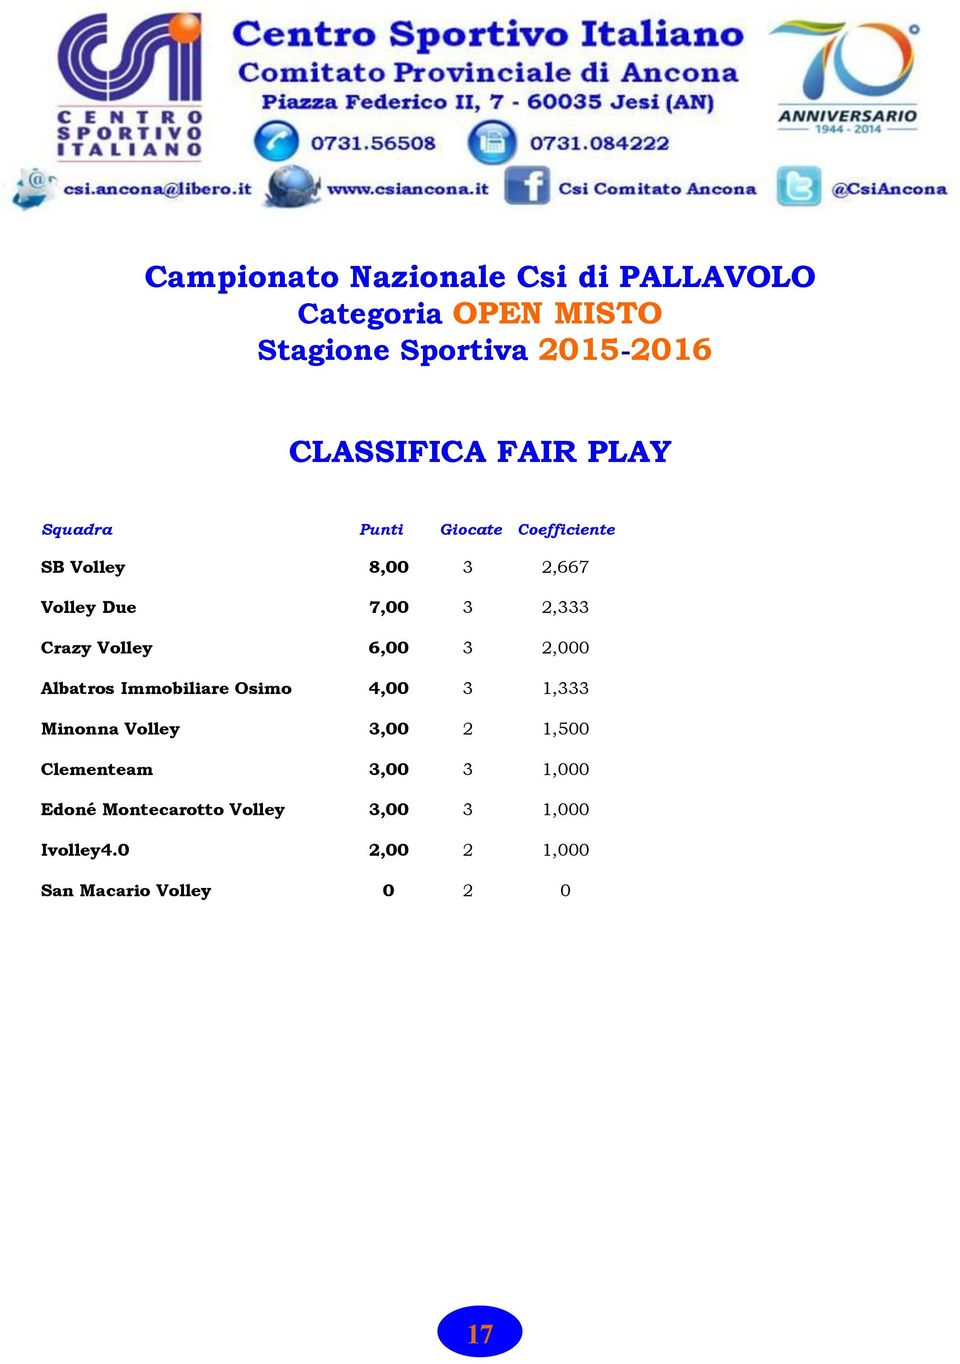 Volley 6,00 3 2,000 Albatros Immobiliare Osimo 4,00 3 1,333 Minonna Volley 3,00 2 1,500 Clementeam